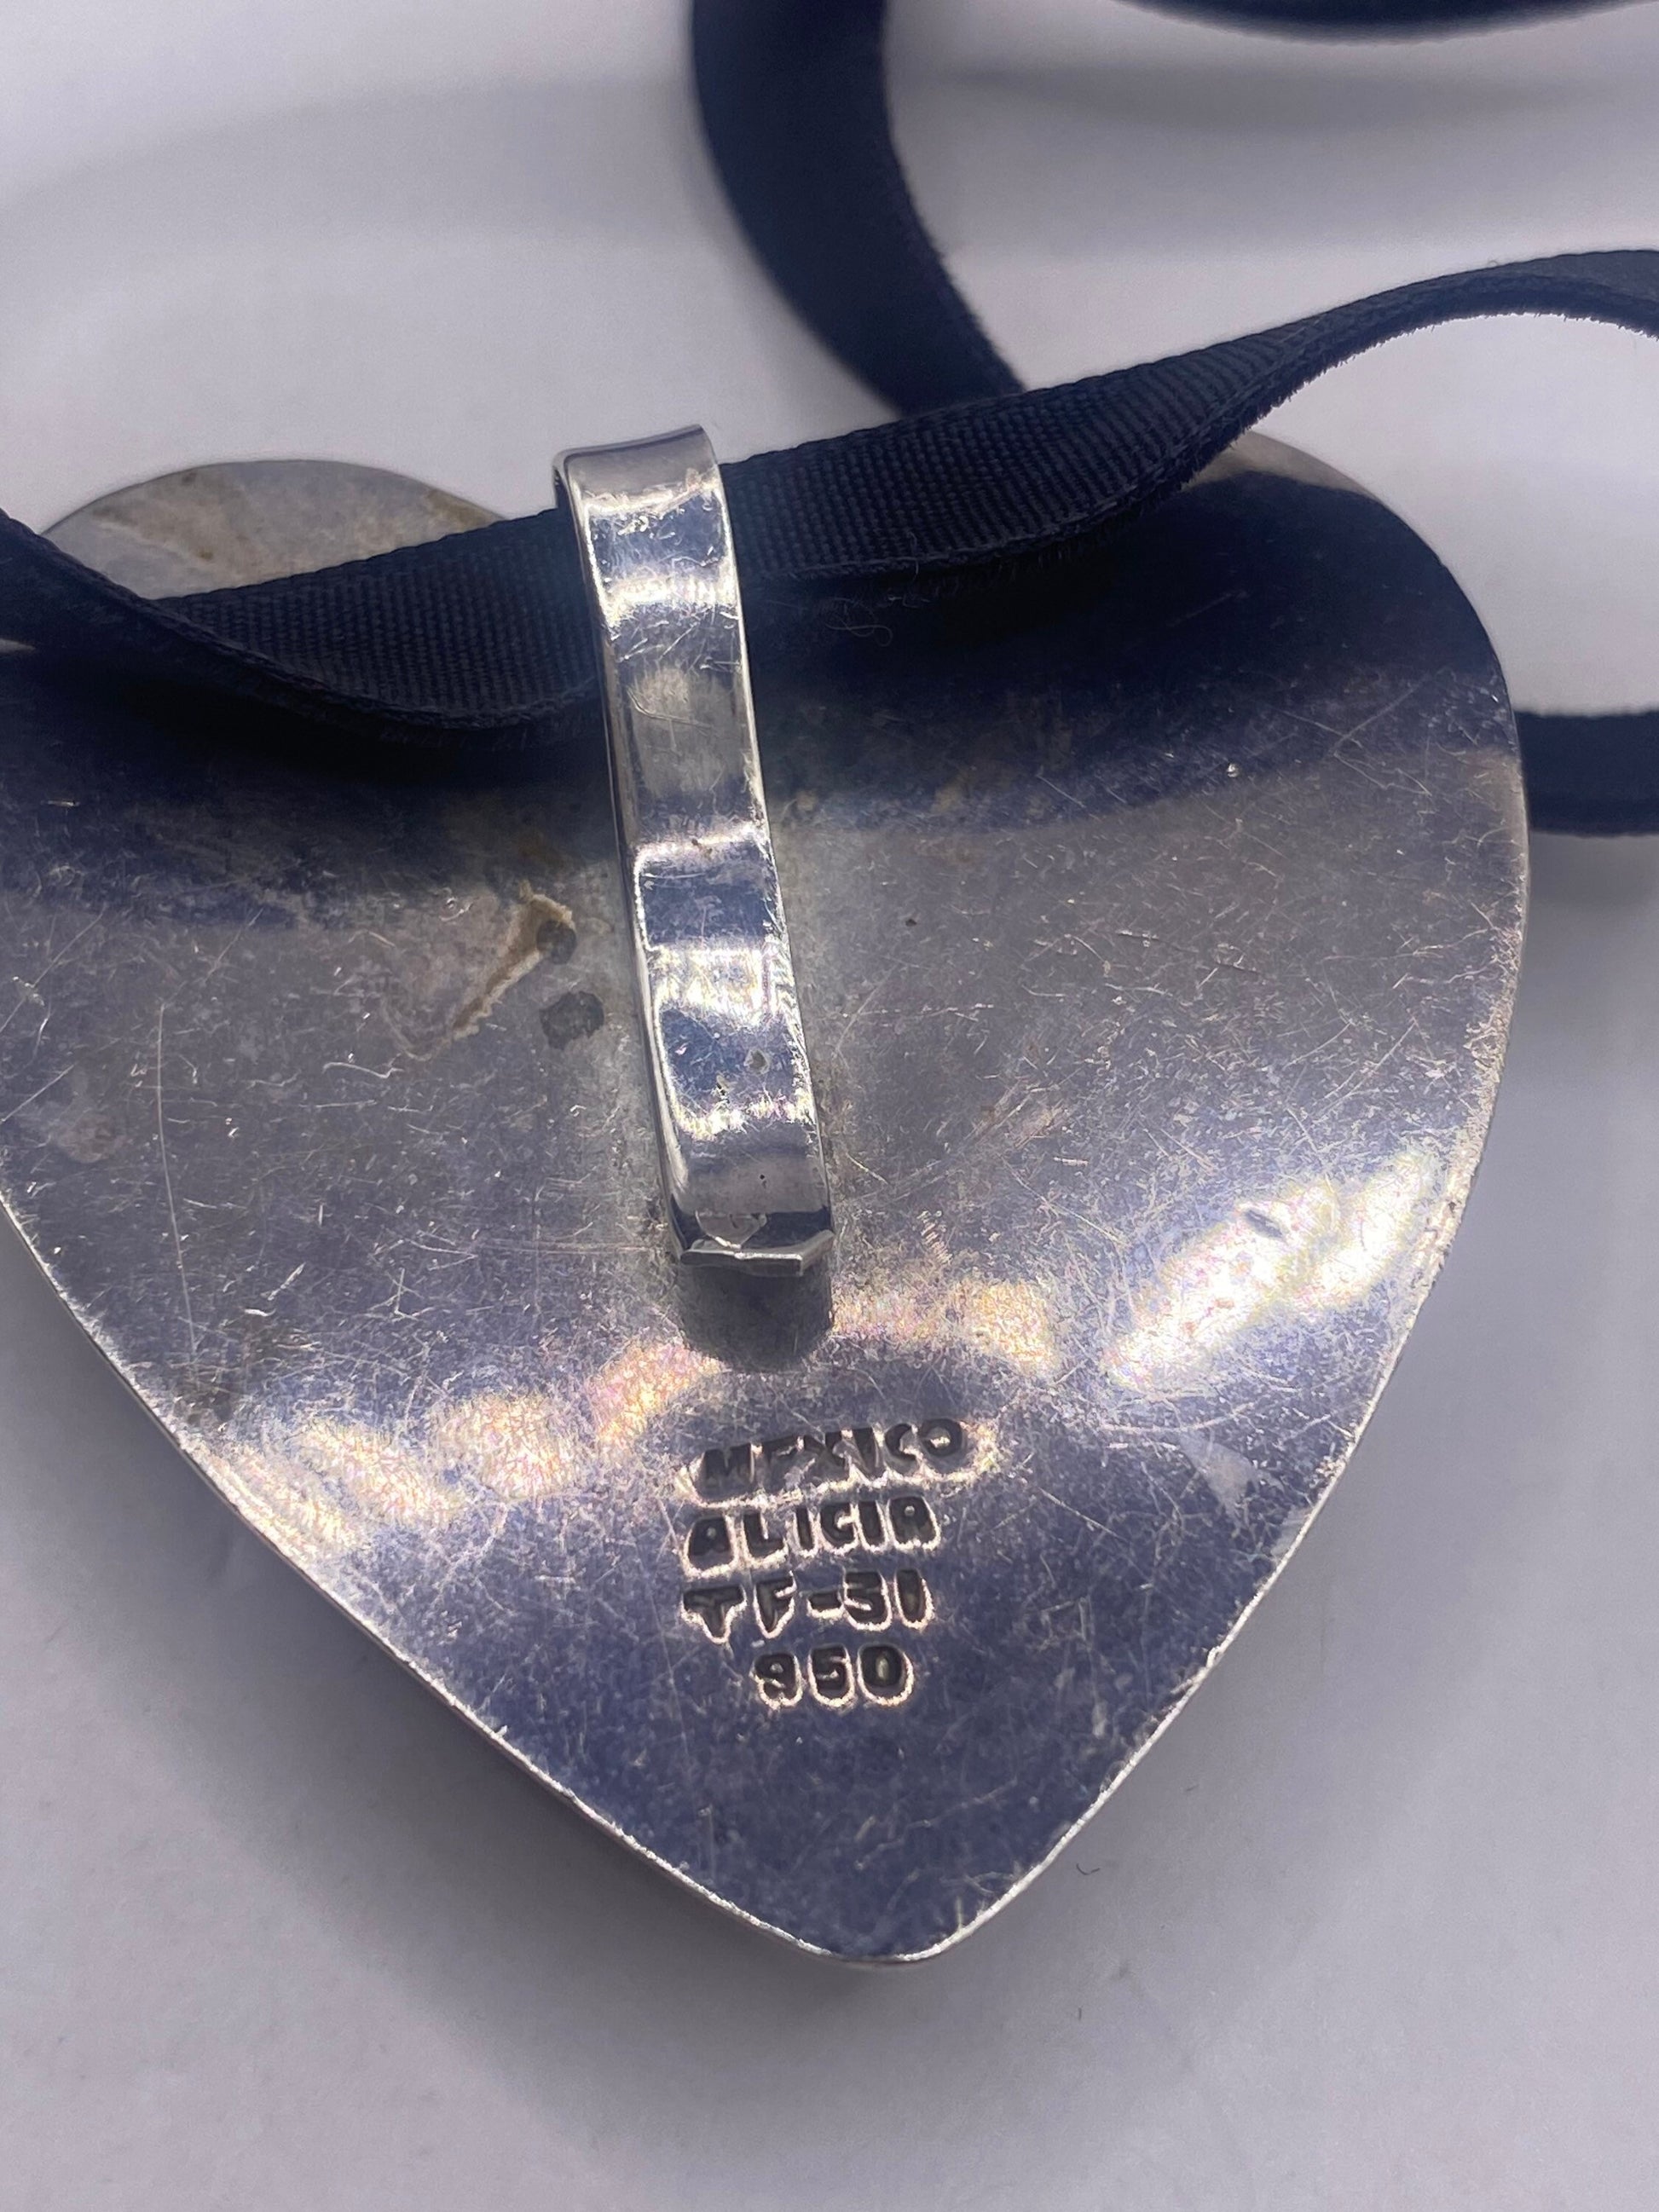 Vintage Heart Pendant 925 Sterling Silver Choker Necklace